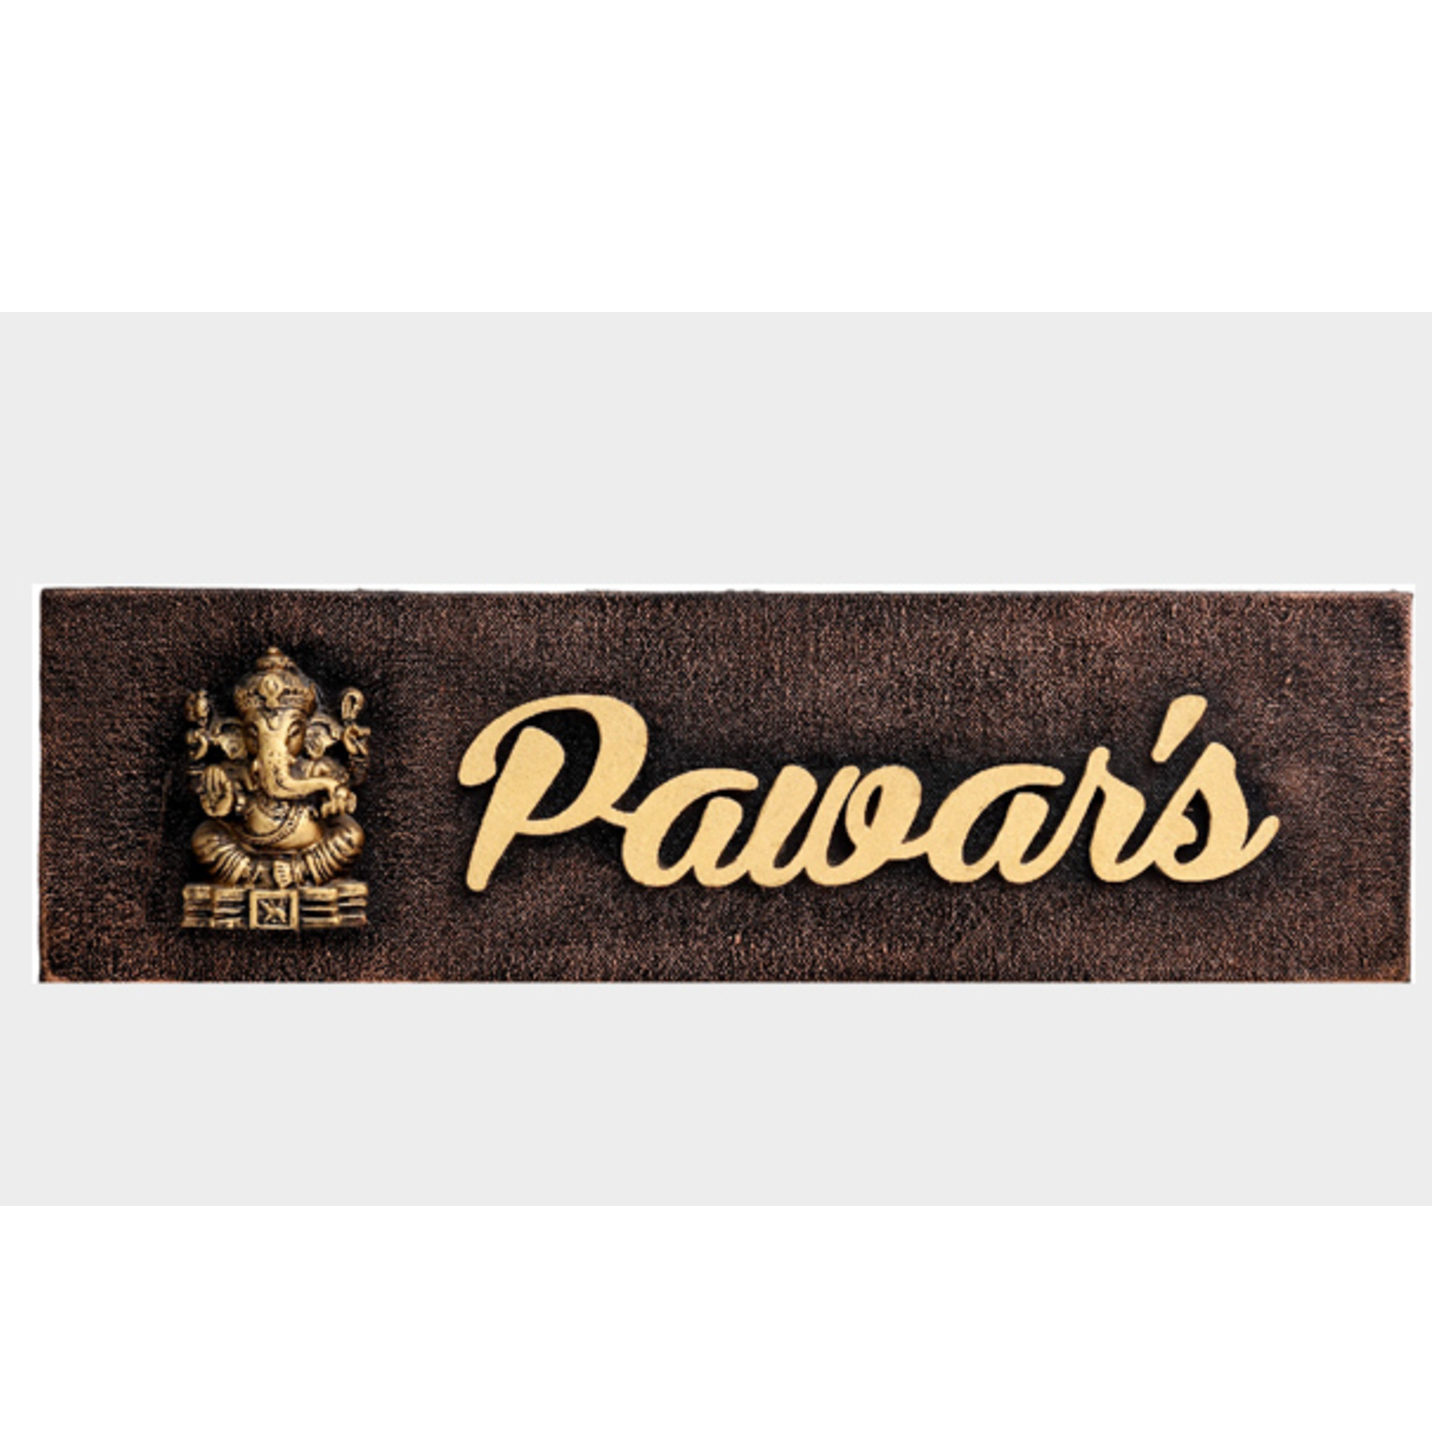 Pawar wood